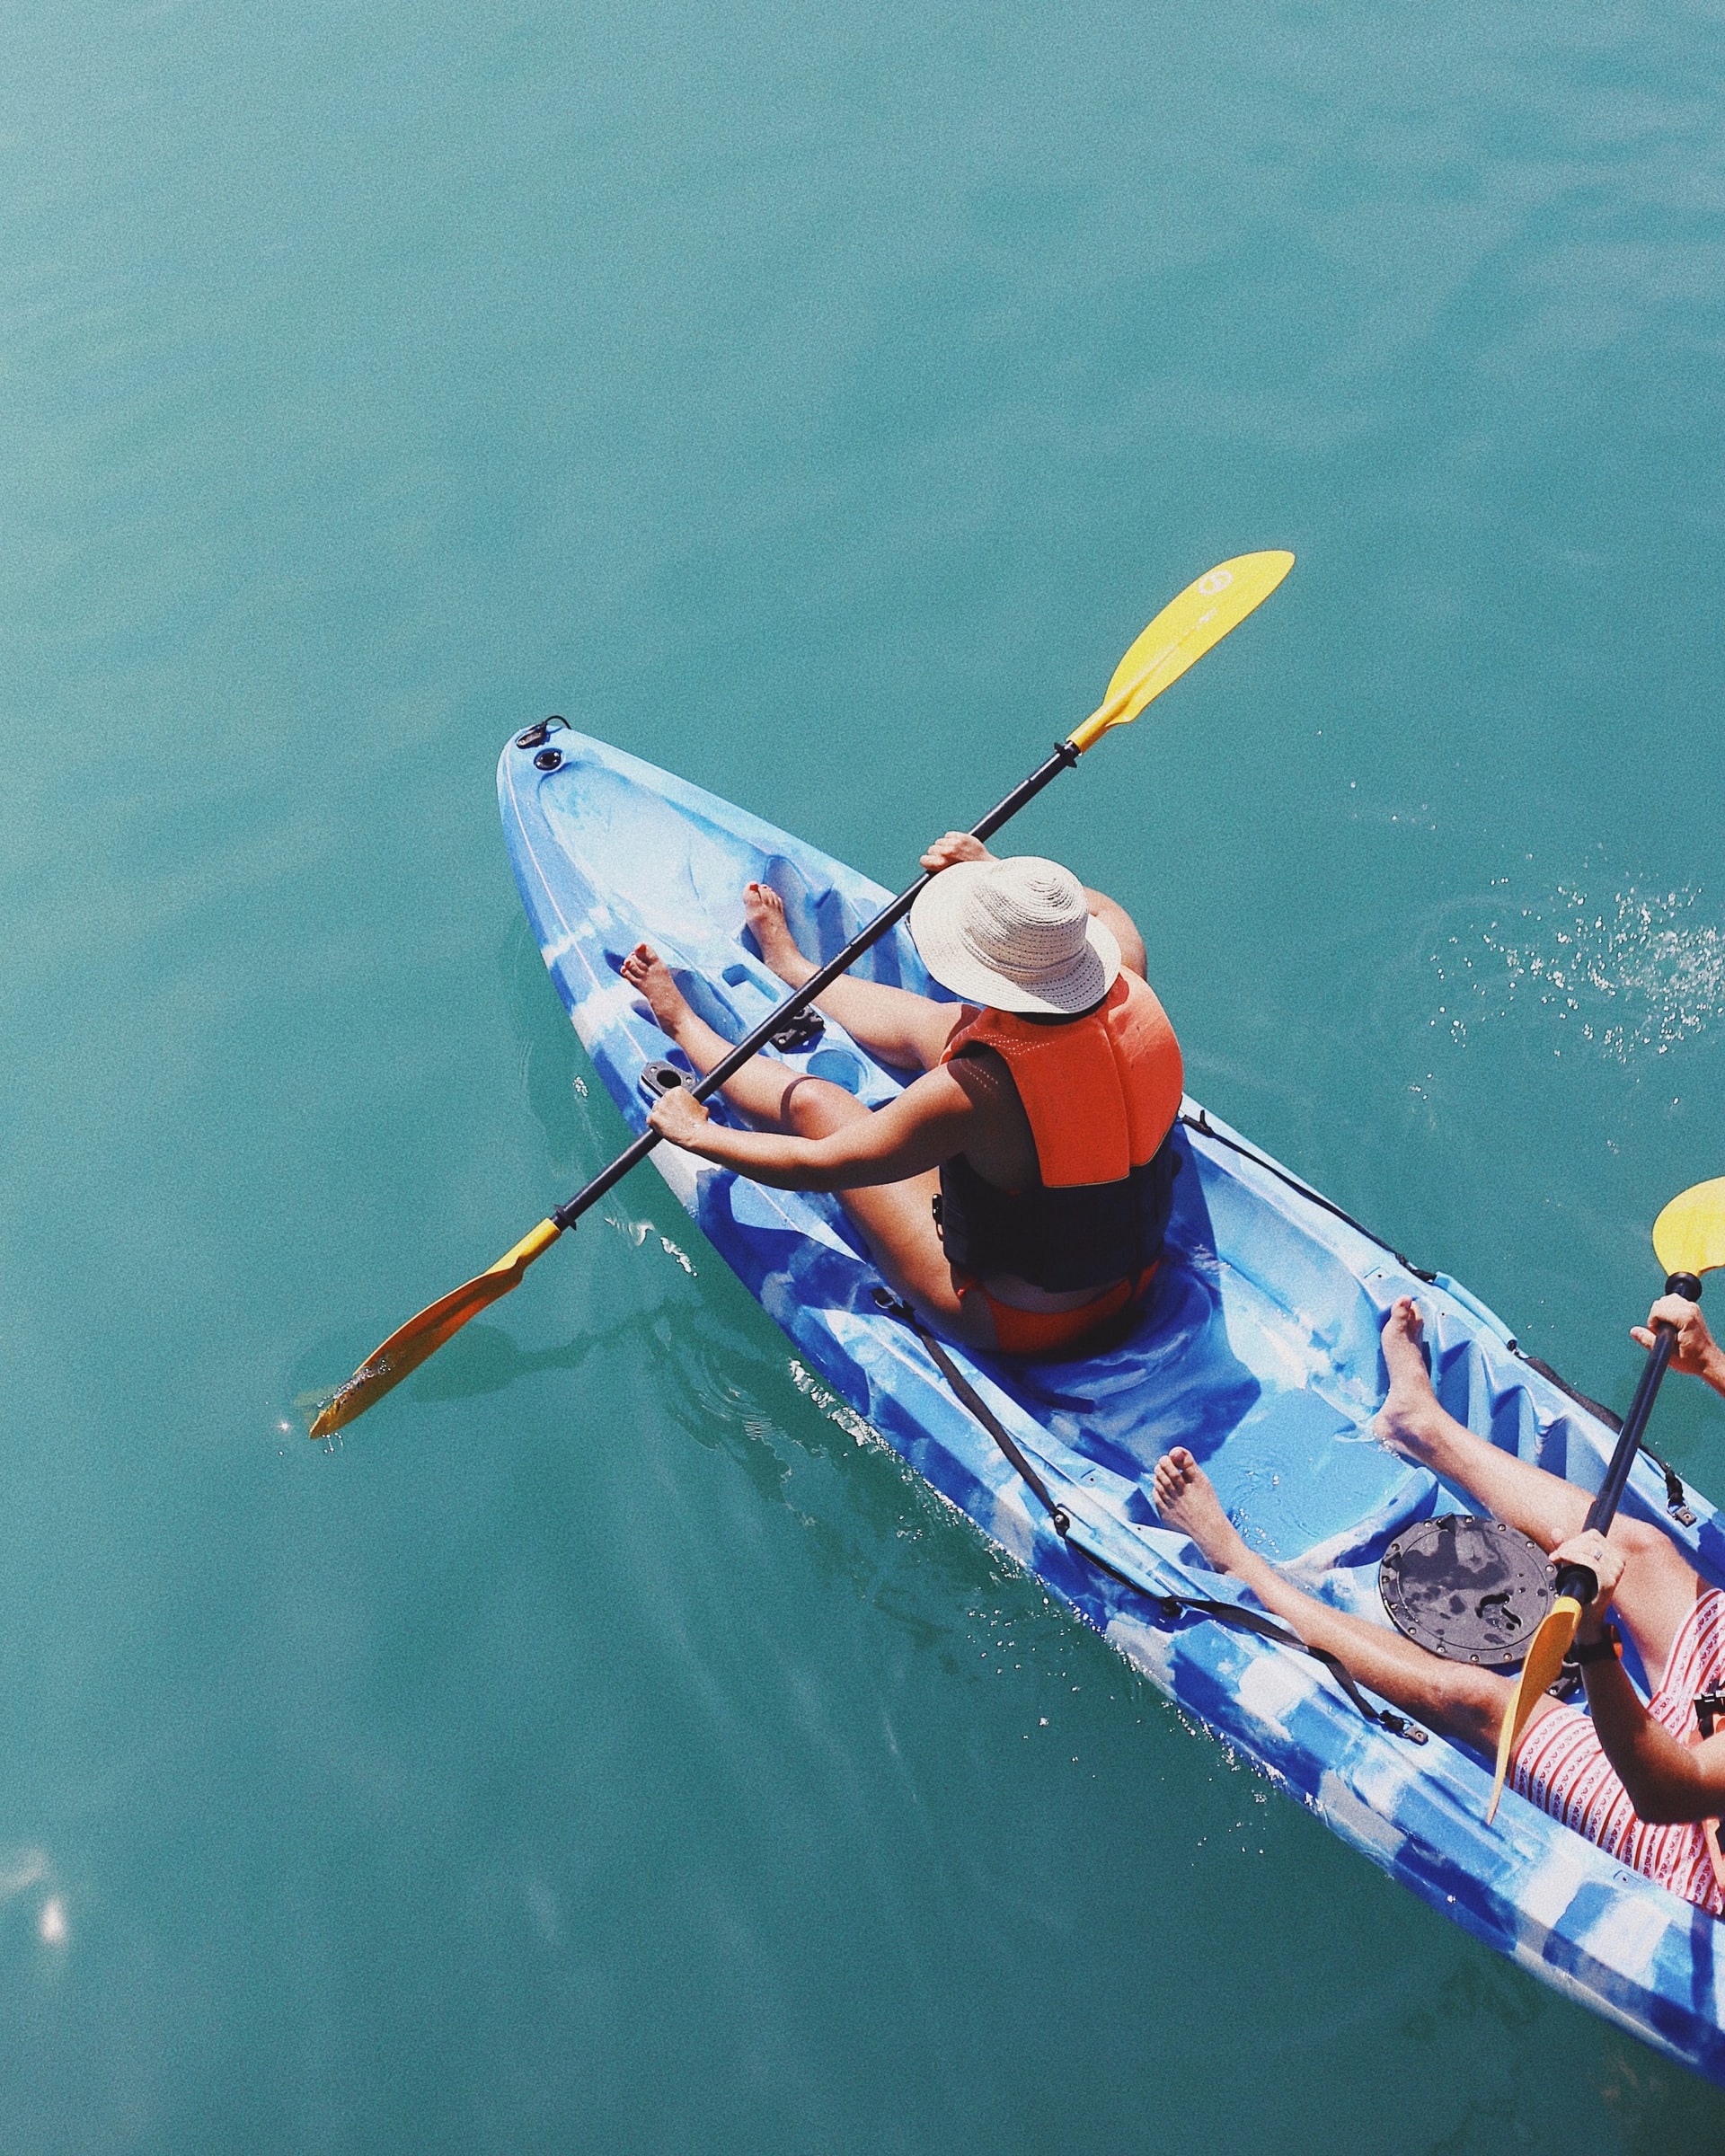 How Long Do Kayaks Last?